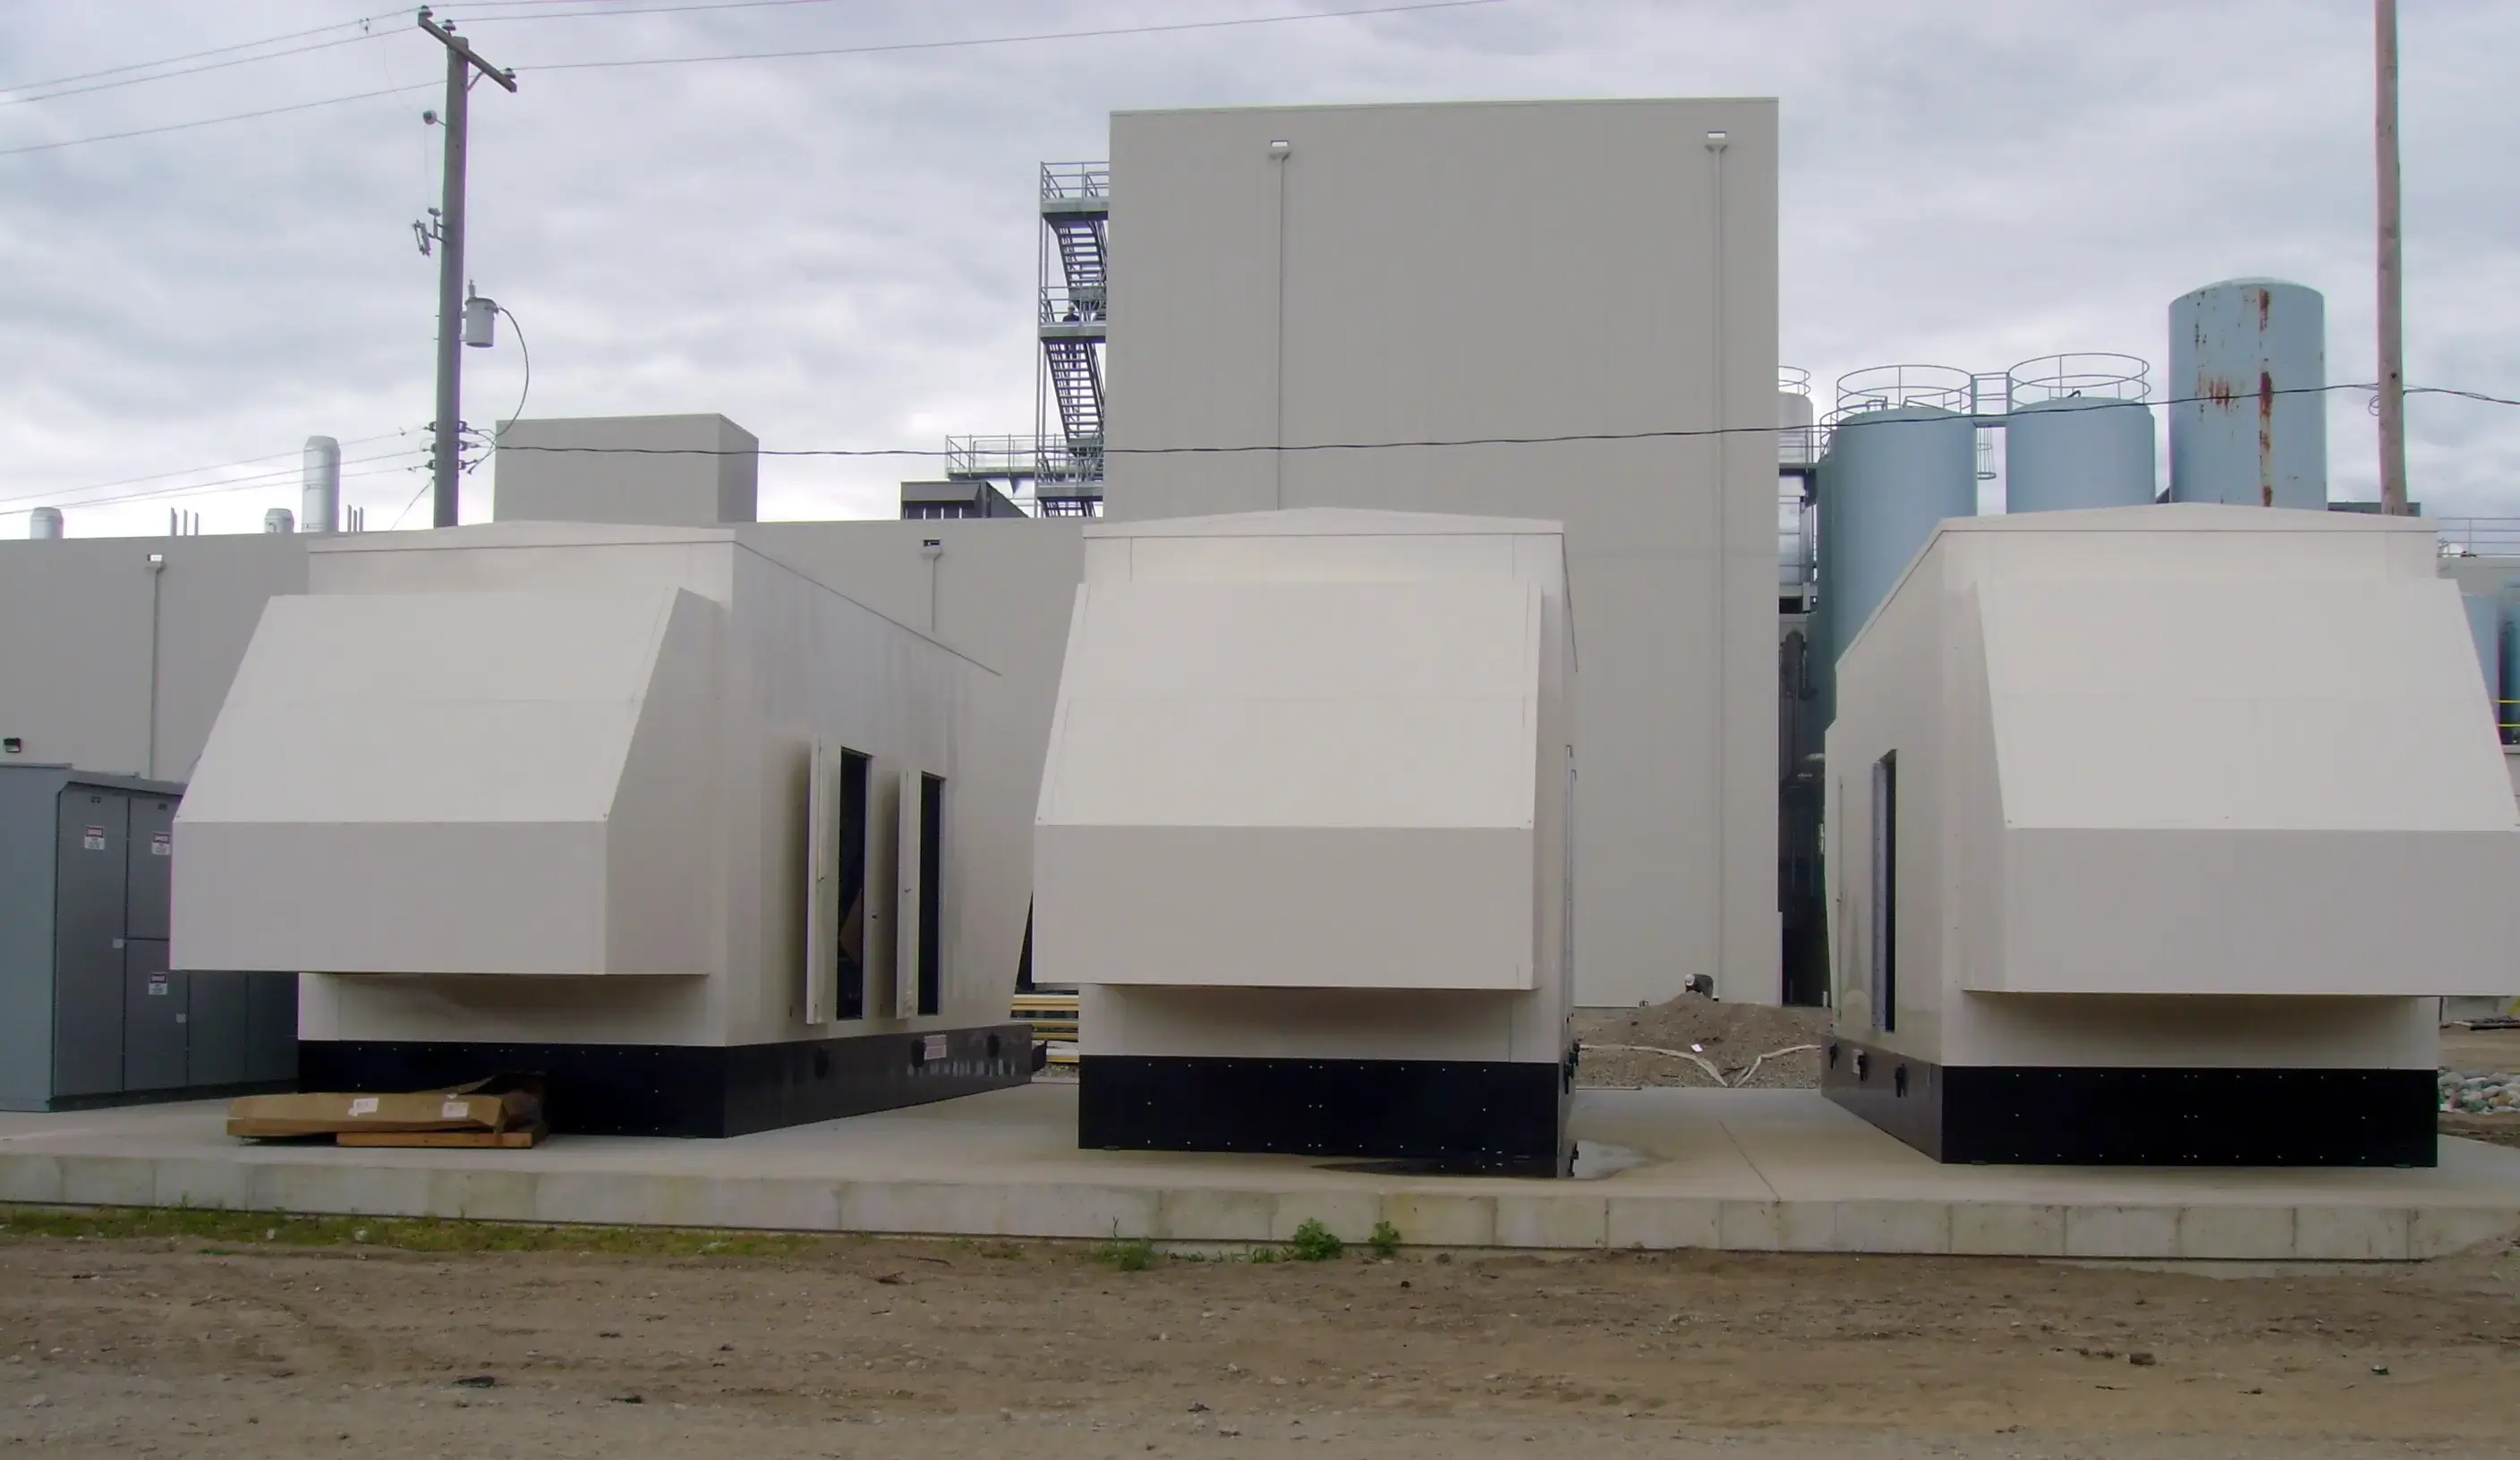 Enclosures Protecting Standby Power Generating Stations at Michigan Milk Producers Association